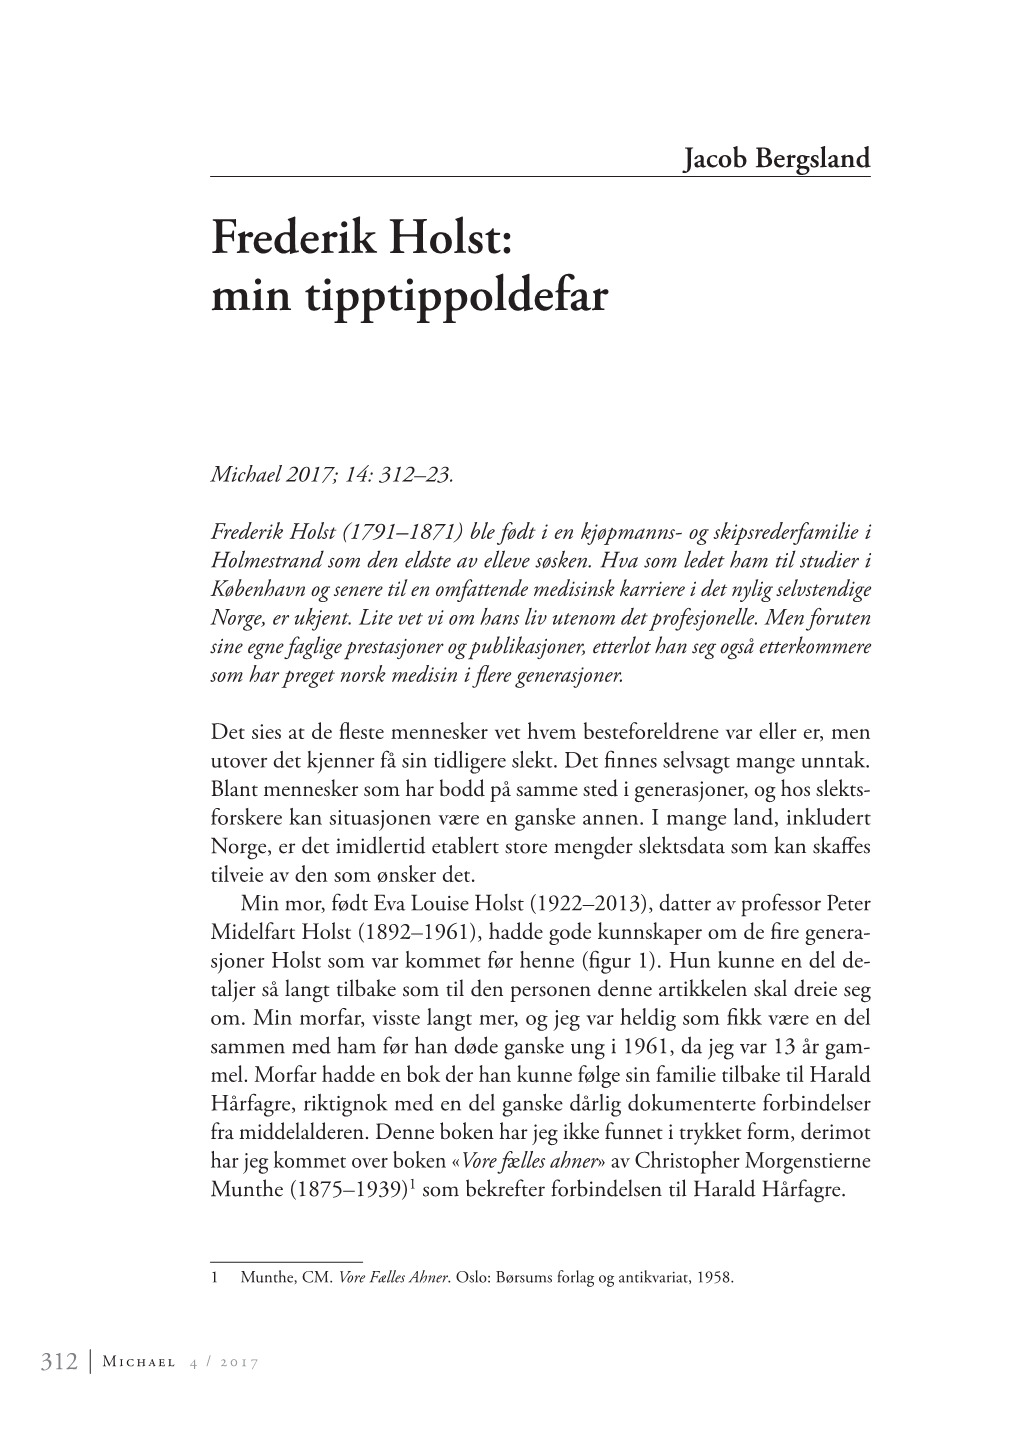 Frederik Holst: Min Tipptippoldefar